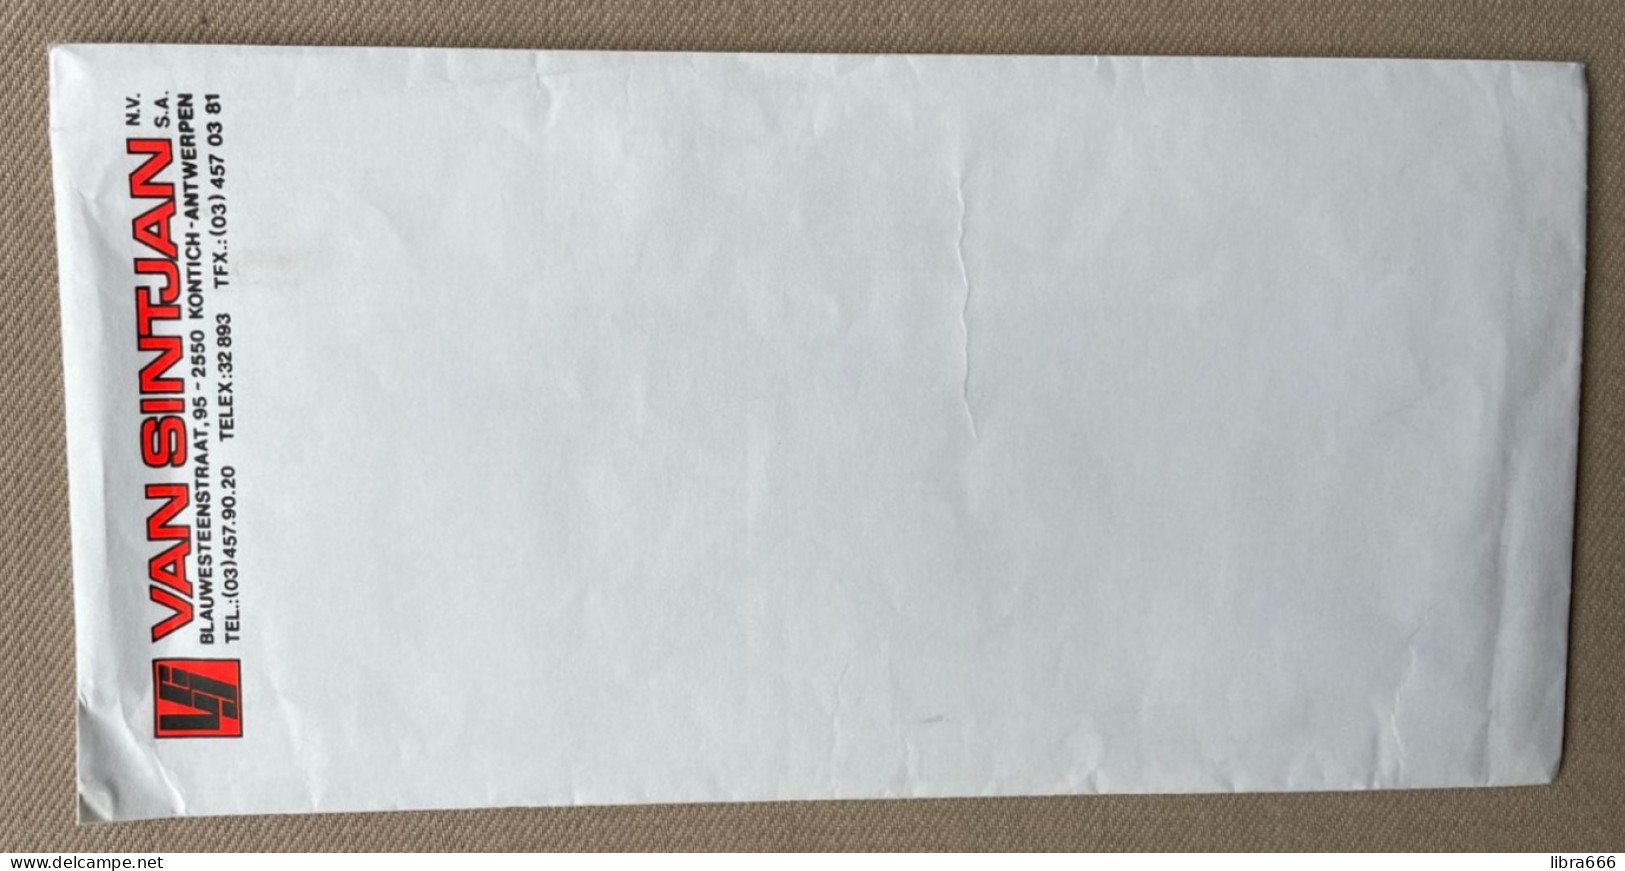 Enveloppe - Envelop / VAN SINTJAN N.v./s.a. - KONTICH - ANTWERPEN - Cartes De Visite